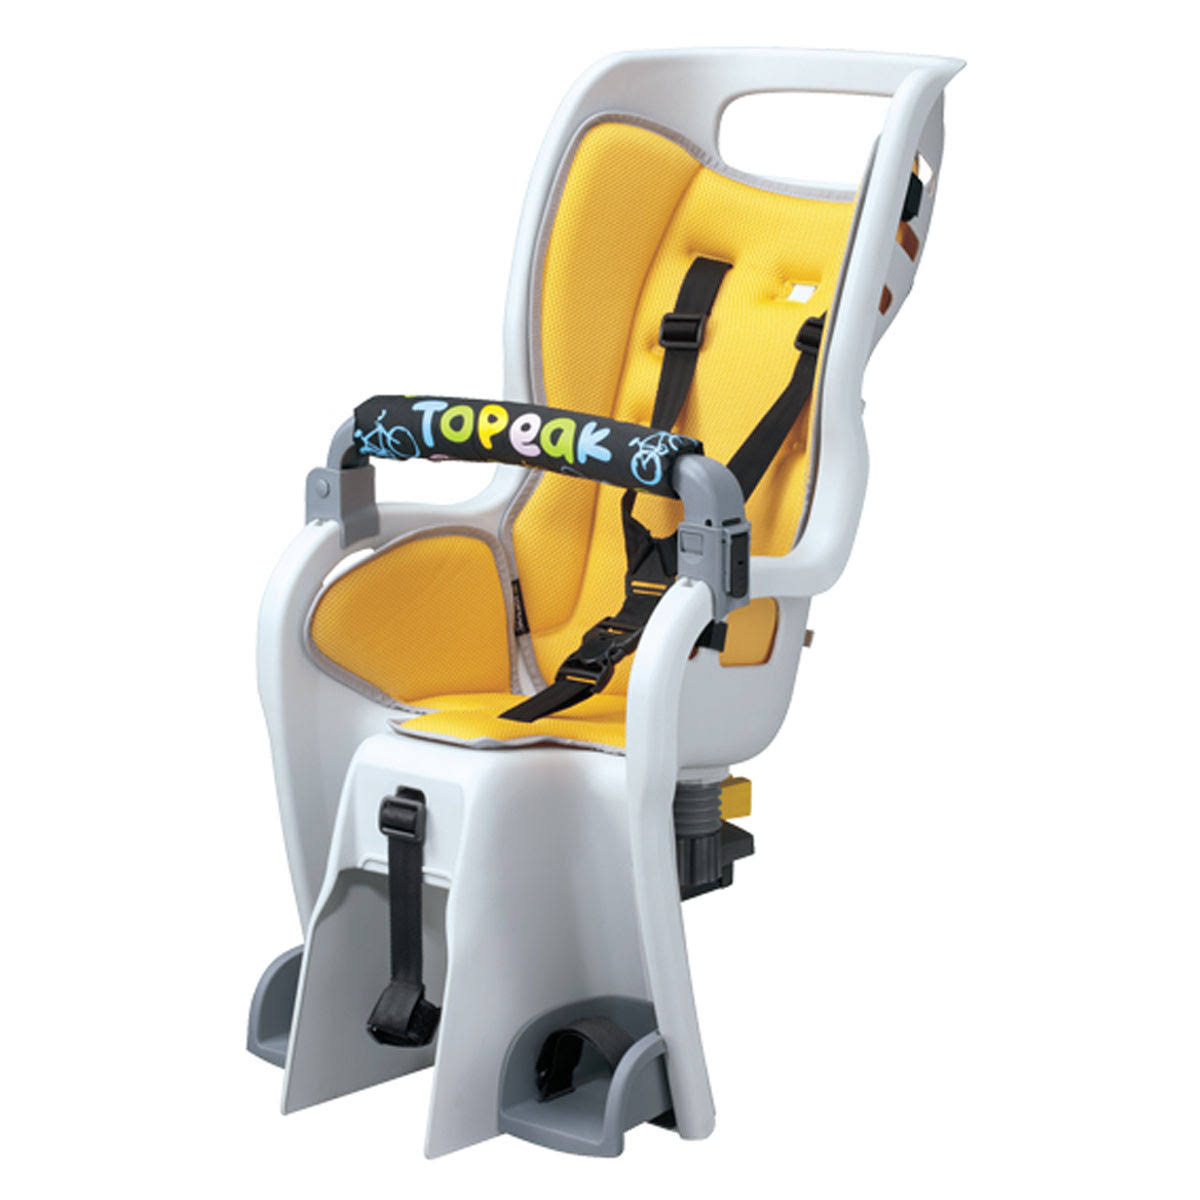 Topeak Babyseat II - Yellow